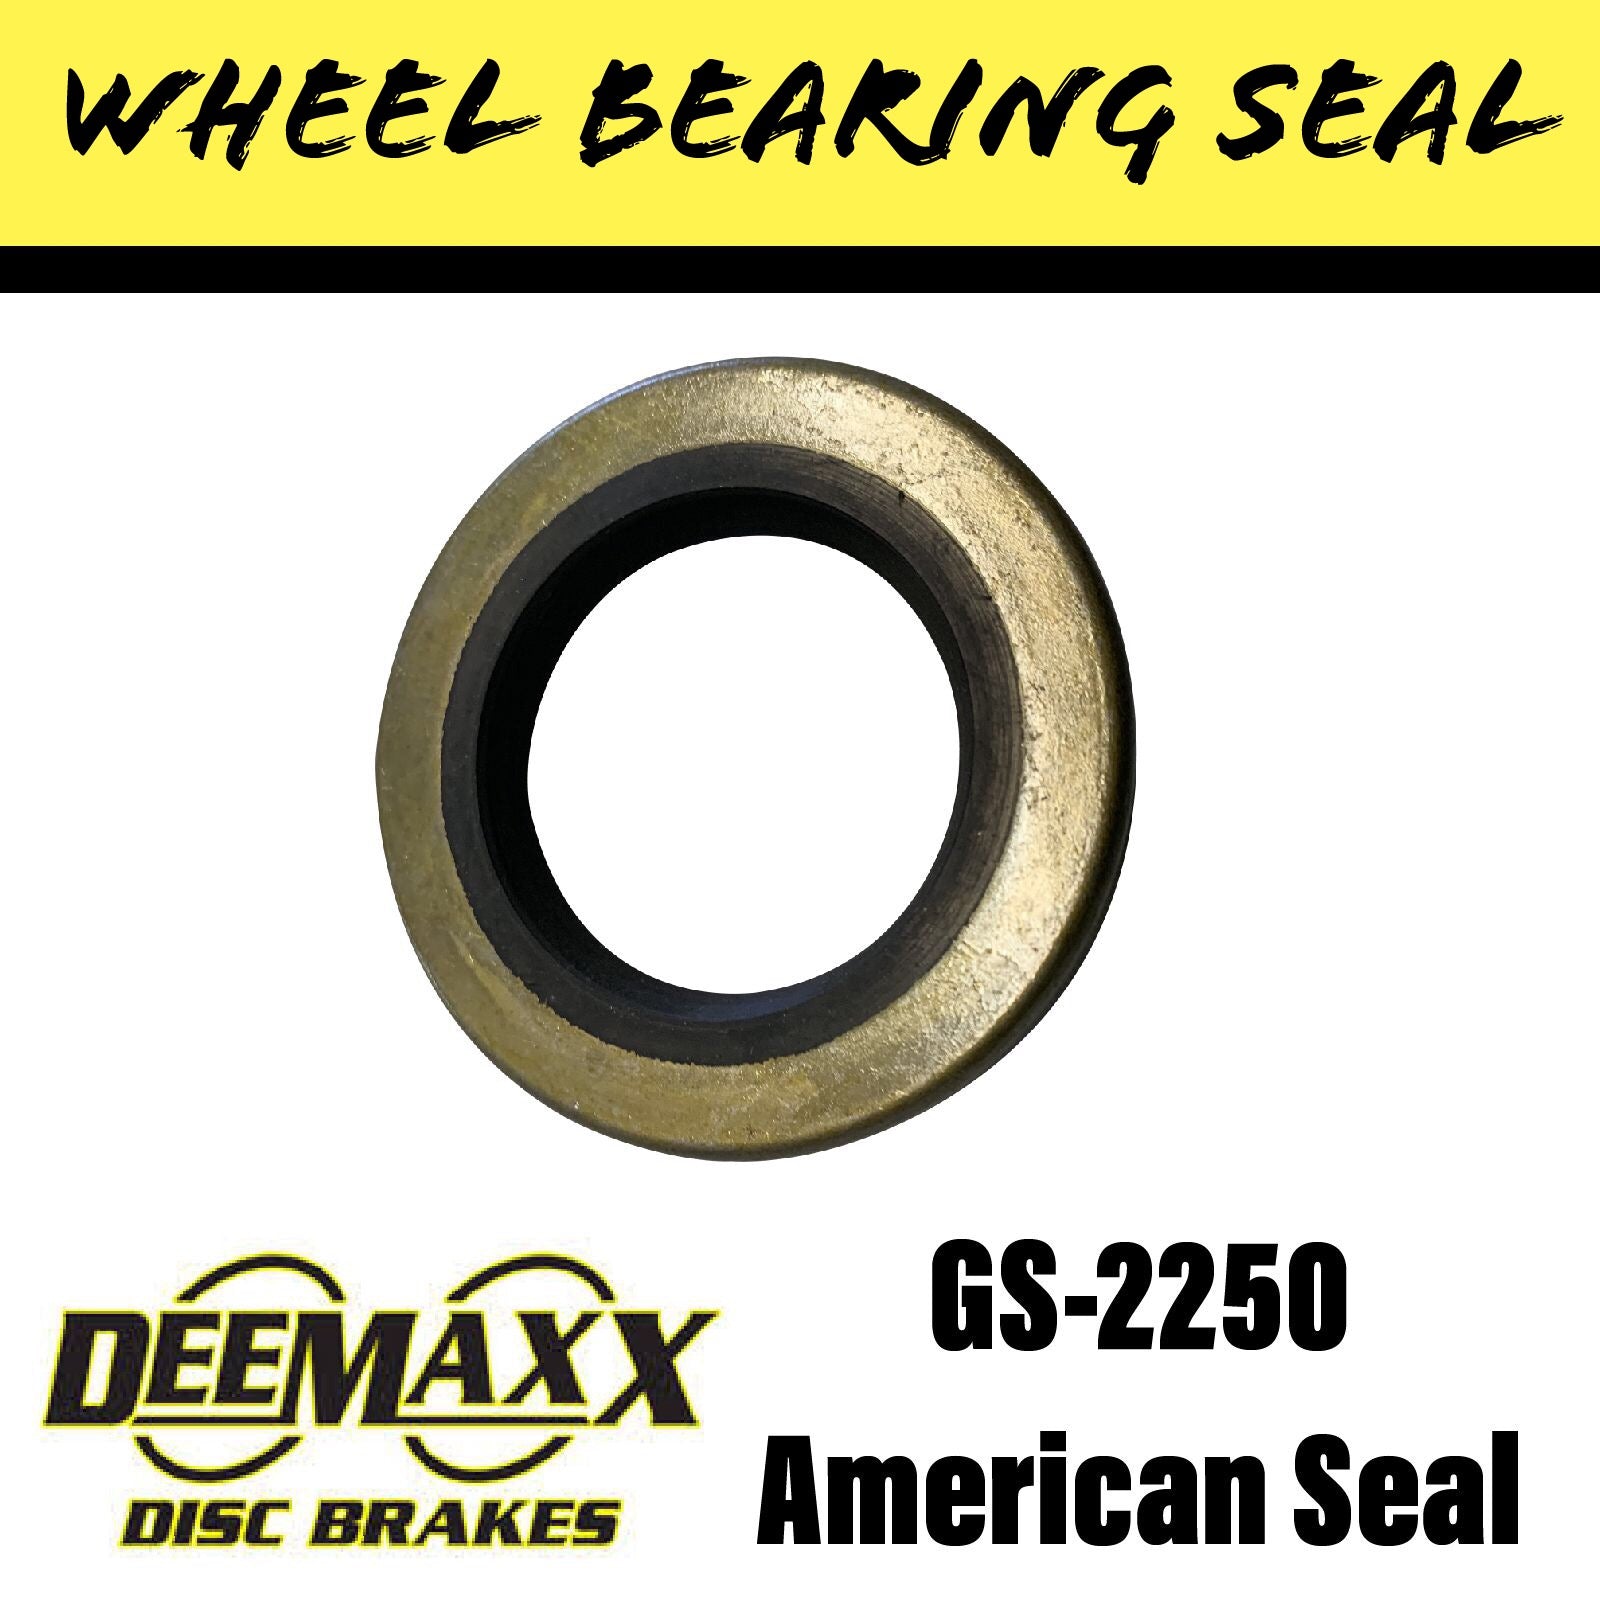 DEEMAXX GS-2250DL Wheel Bearing Seal